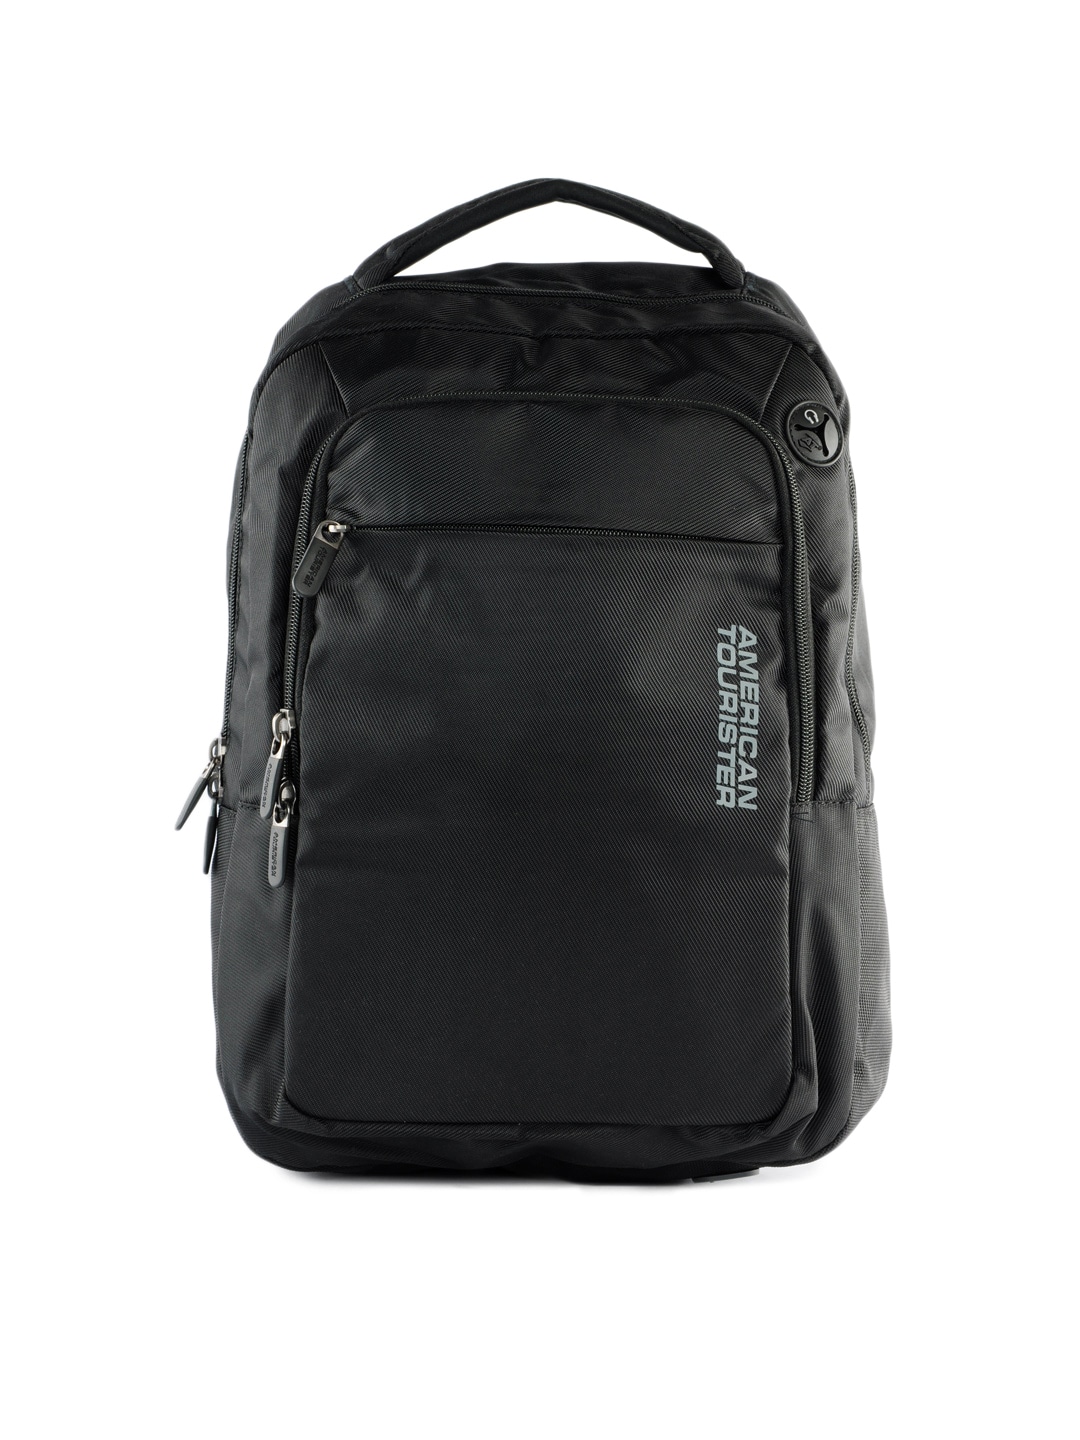 American Tourister Unisex Citi Pro Black Backpack